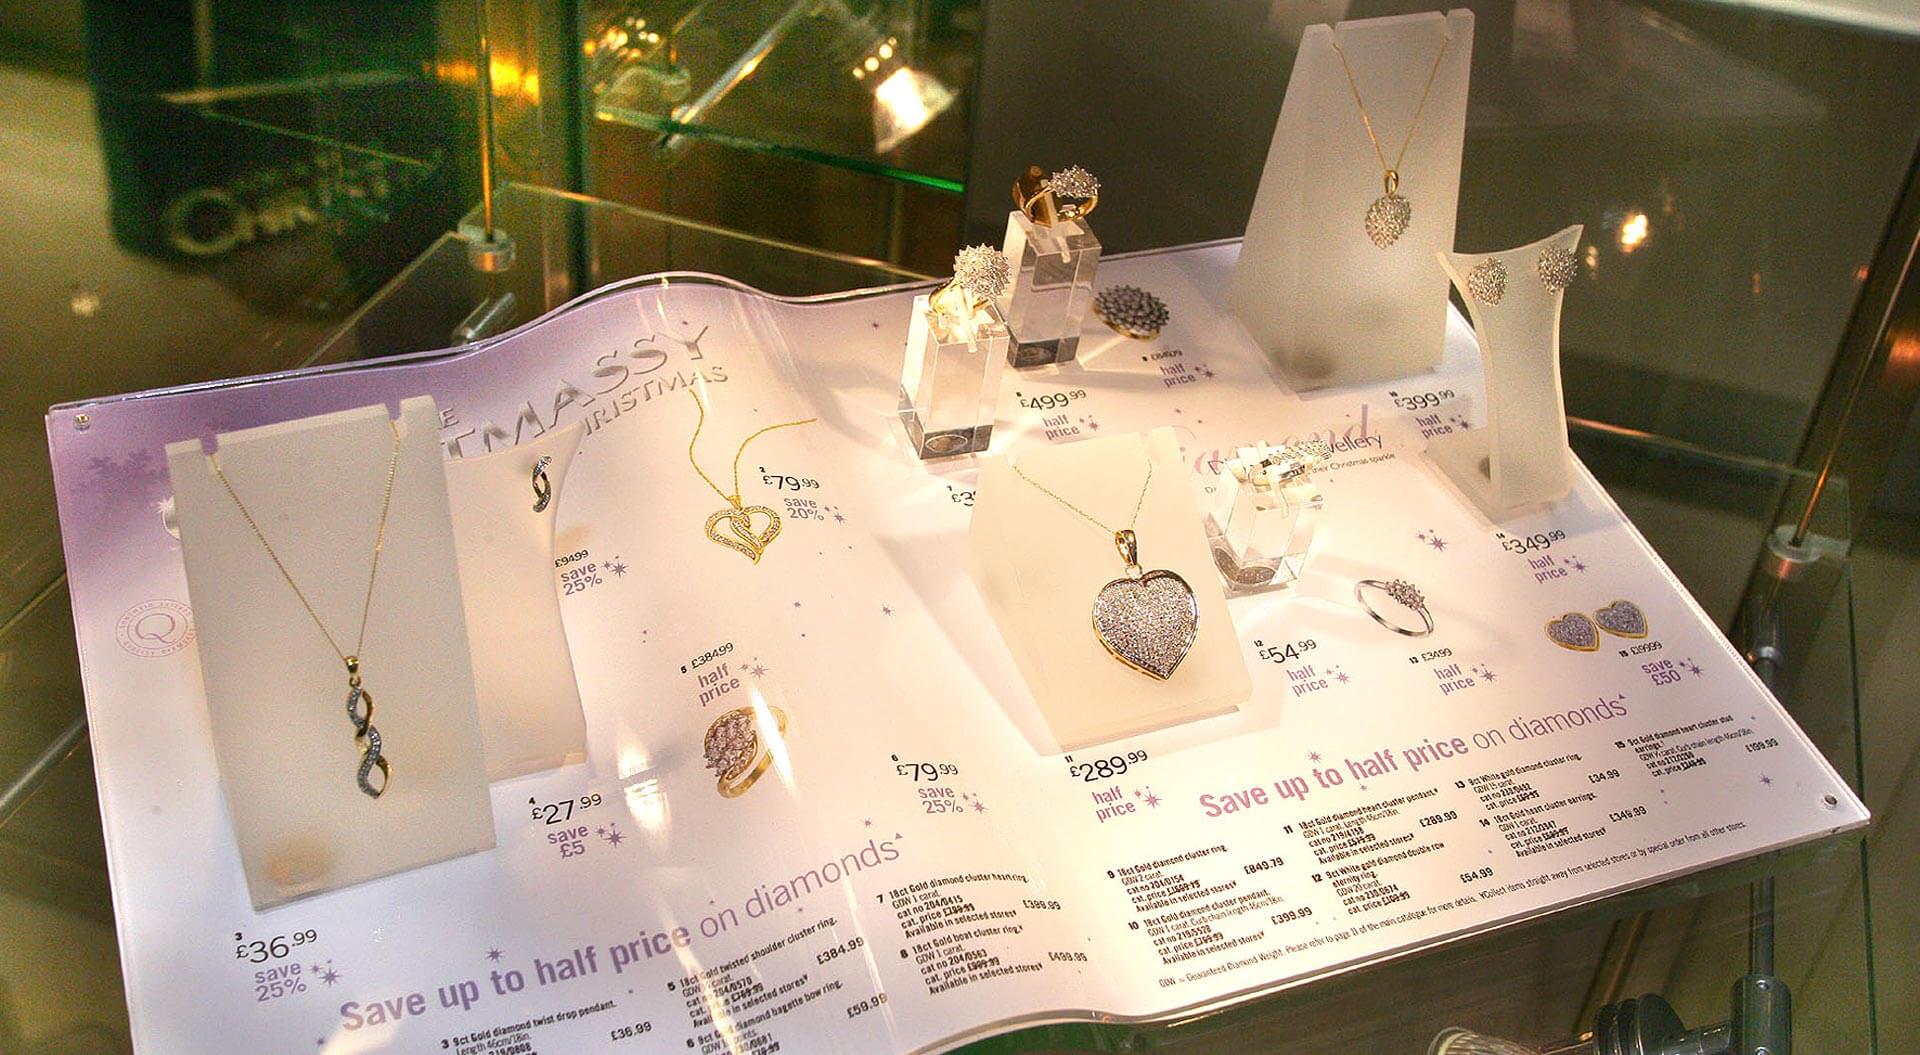 Argos store jewellery and watch gallery visual merchandising display